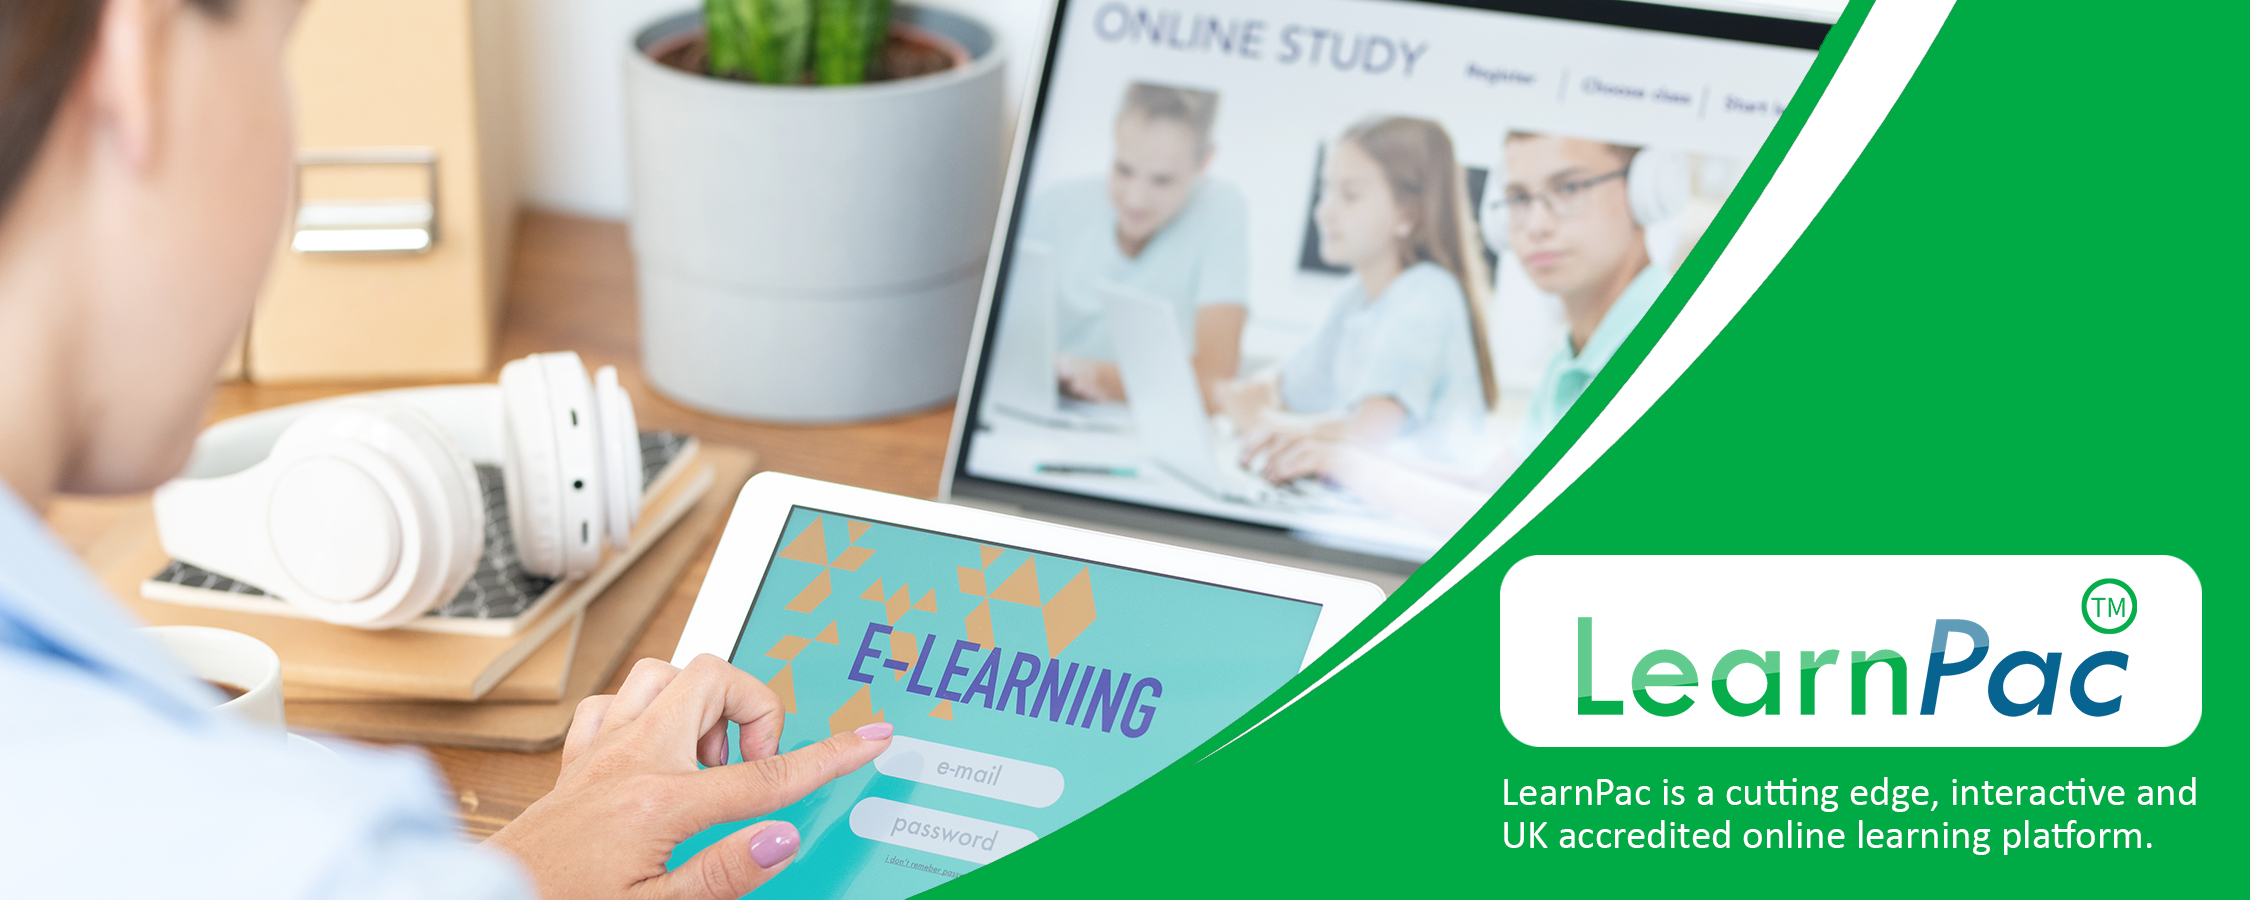 Performance Management Training - Online Learning Courses - E-Learning Courses - LearnPac Systems UK -